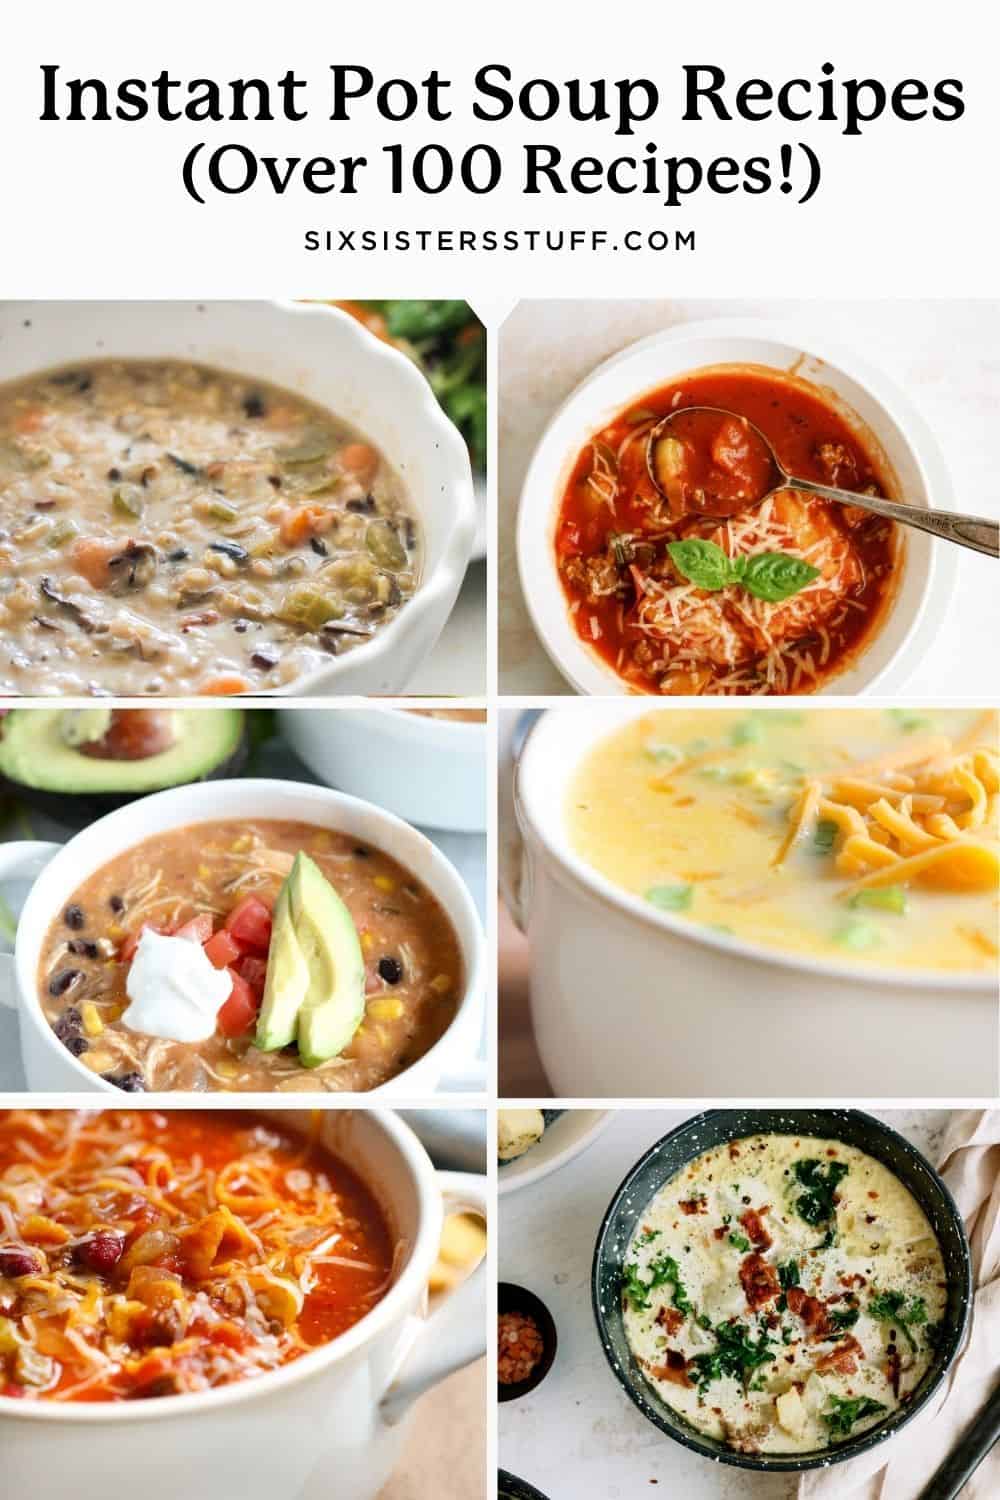 https://www.sixsistersstuff.com/wp-content/uploads/2021/08/Instant-Pot-Soup-Recipes.jpg